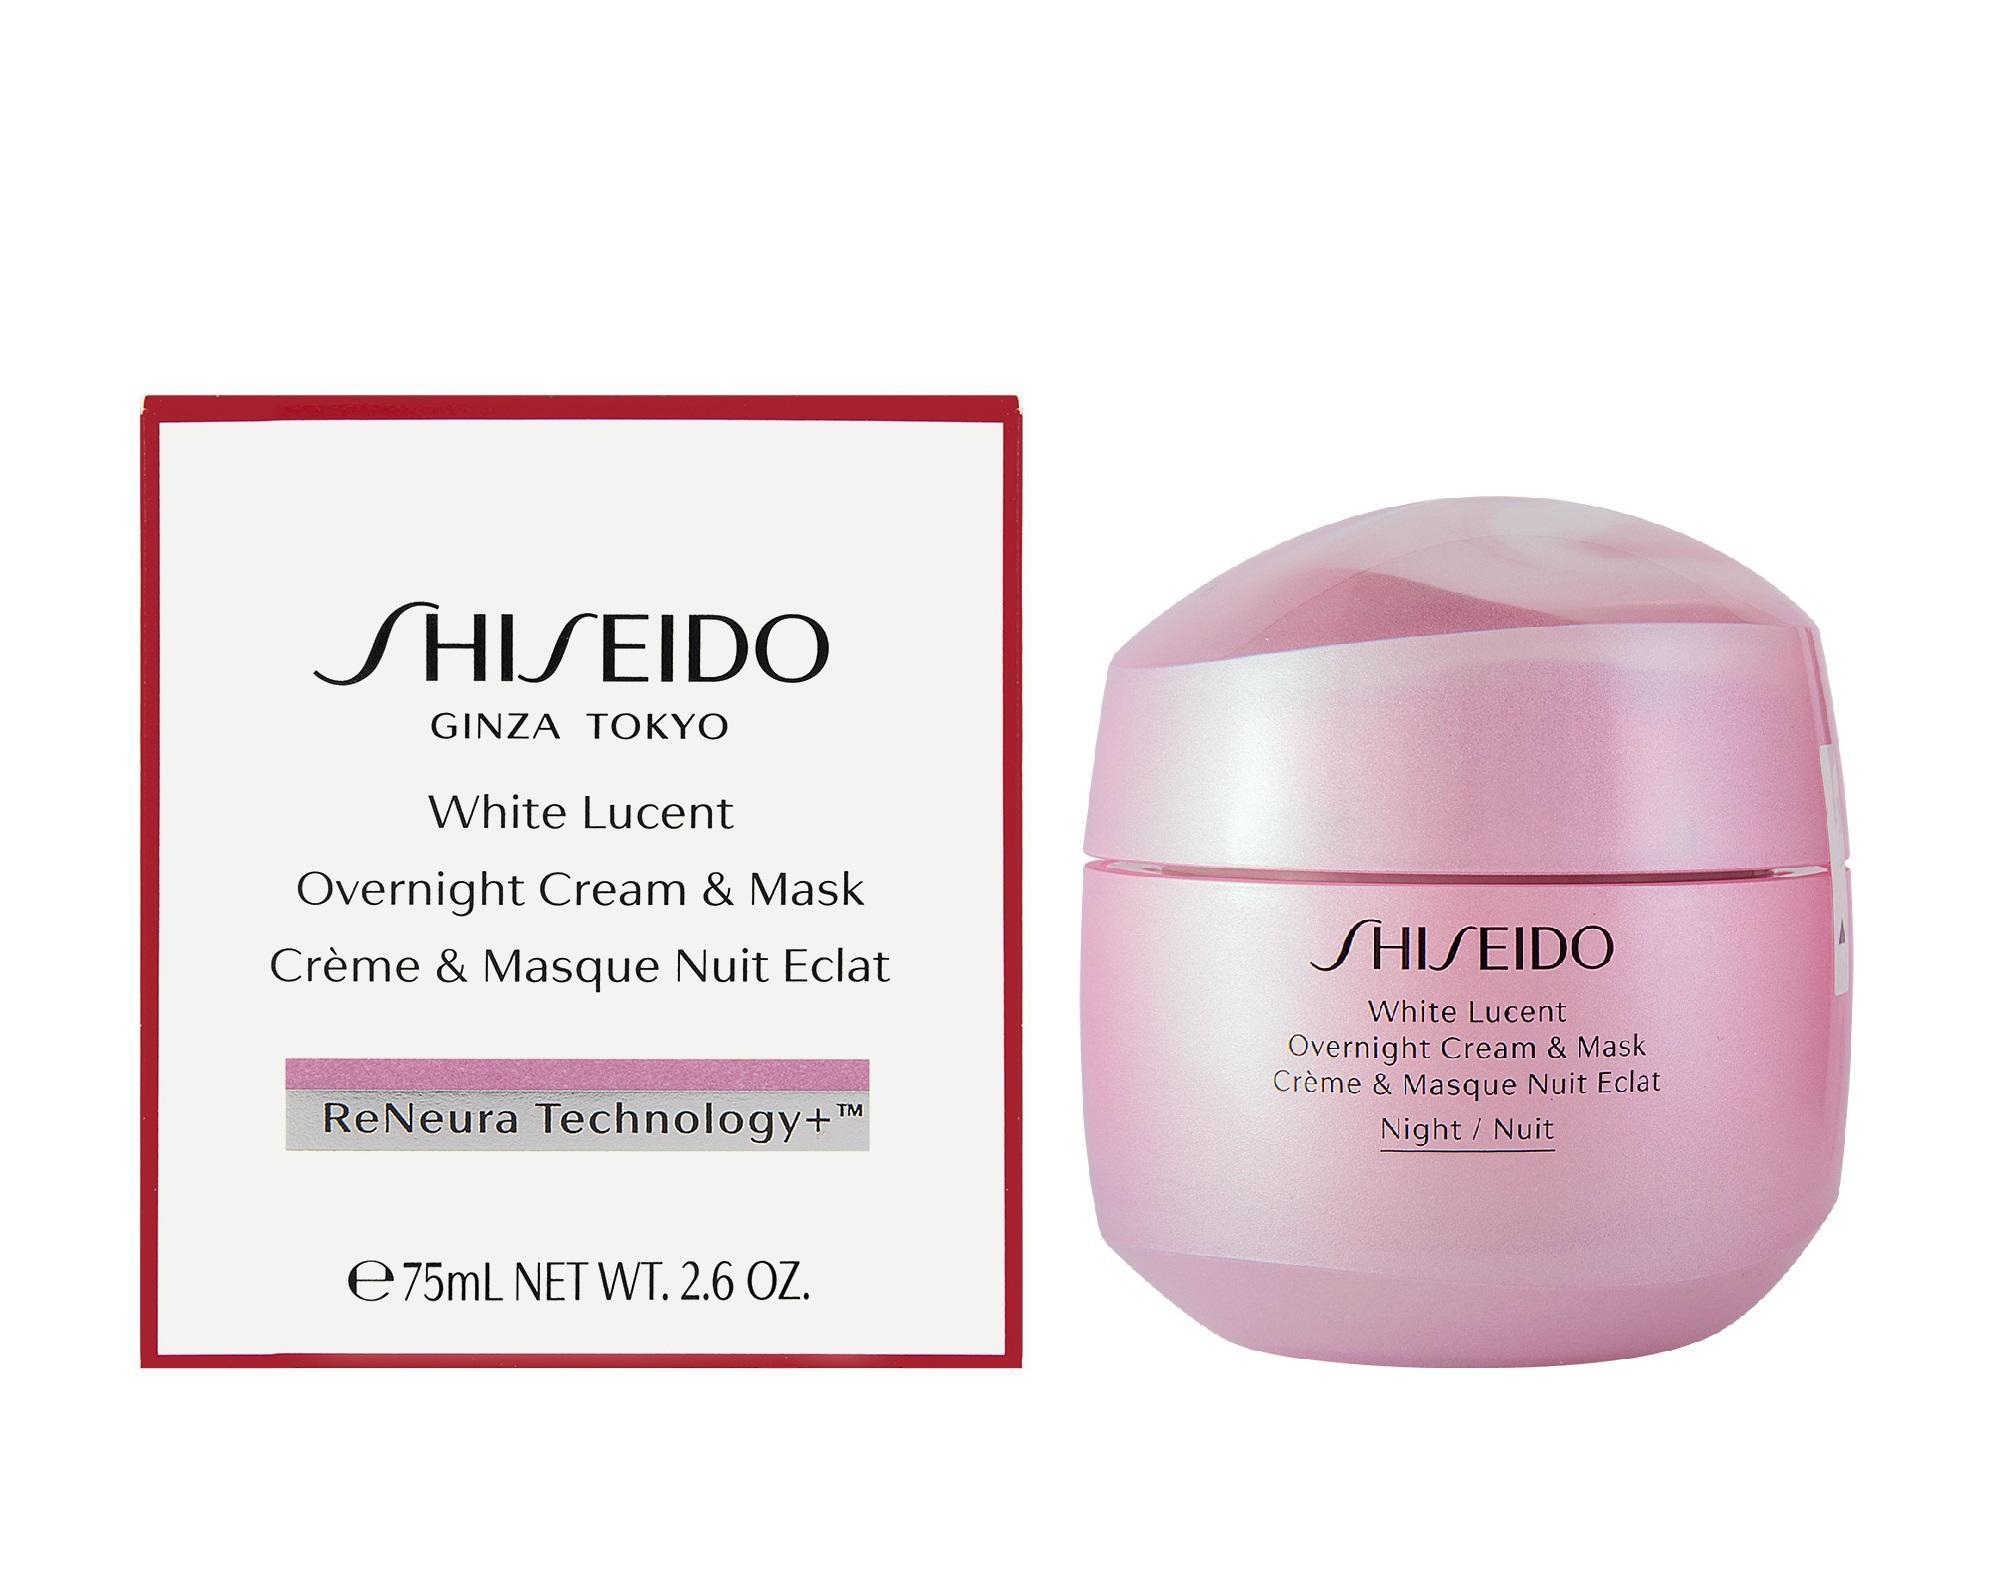 Shiseido White Lucent Overnight Cream & Mask Нощен хидратиращ крем и маска за жени